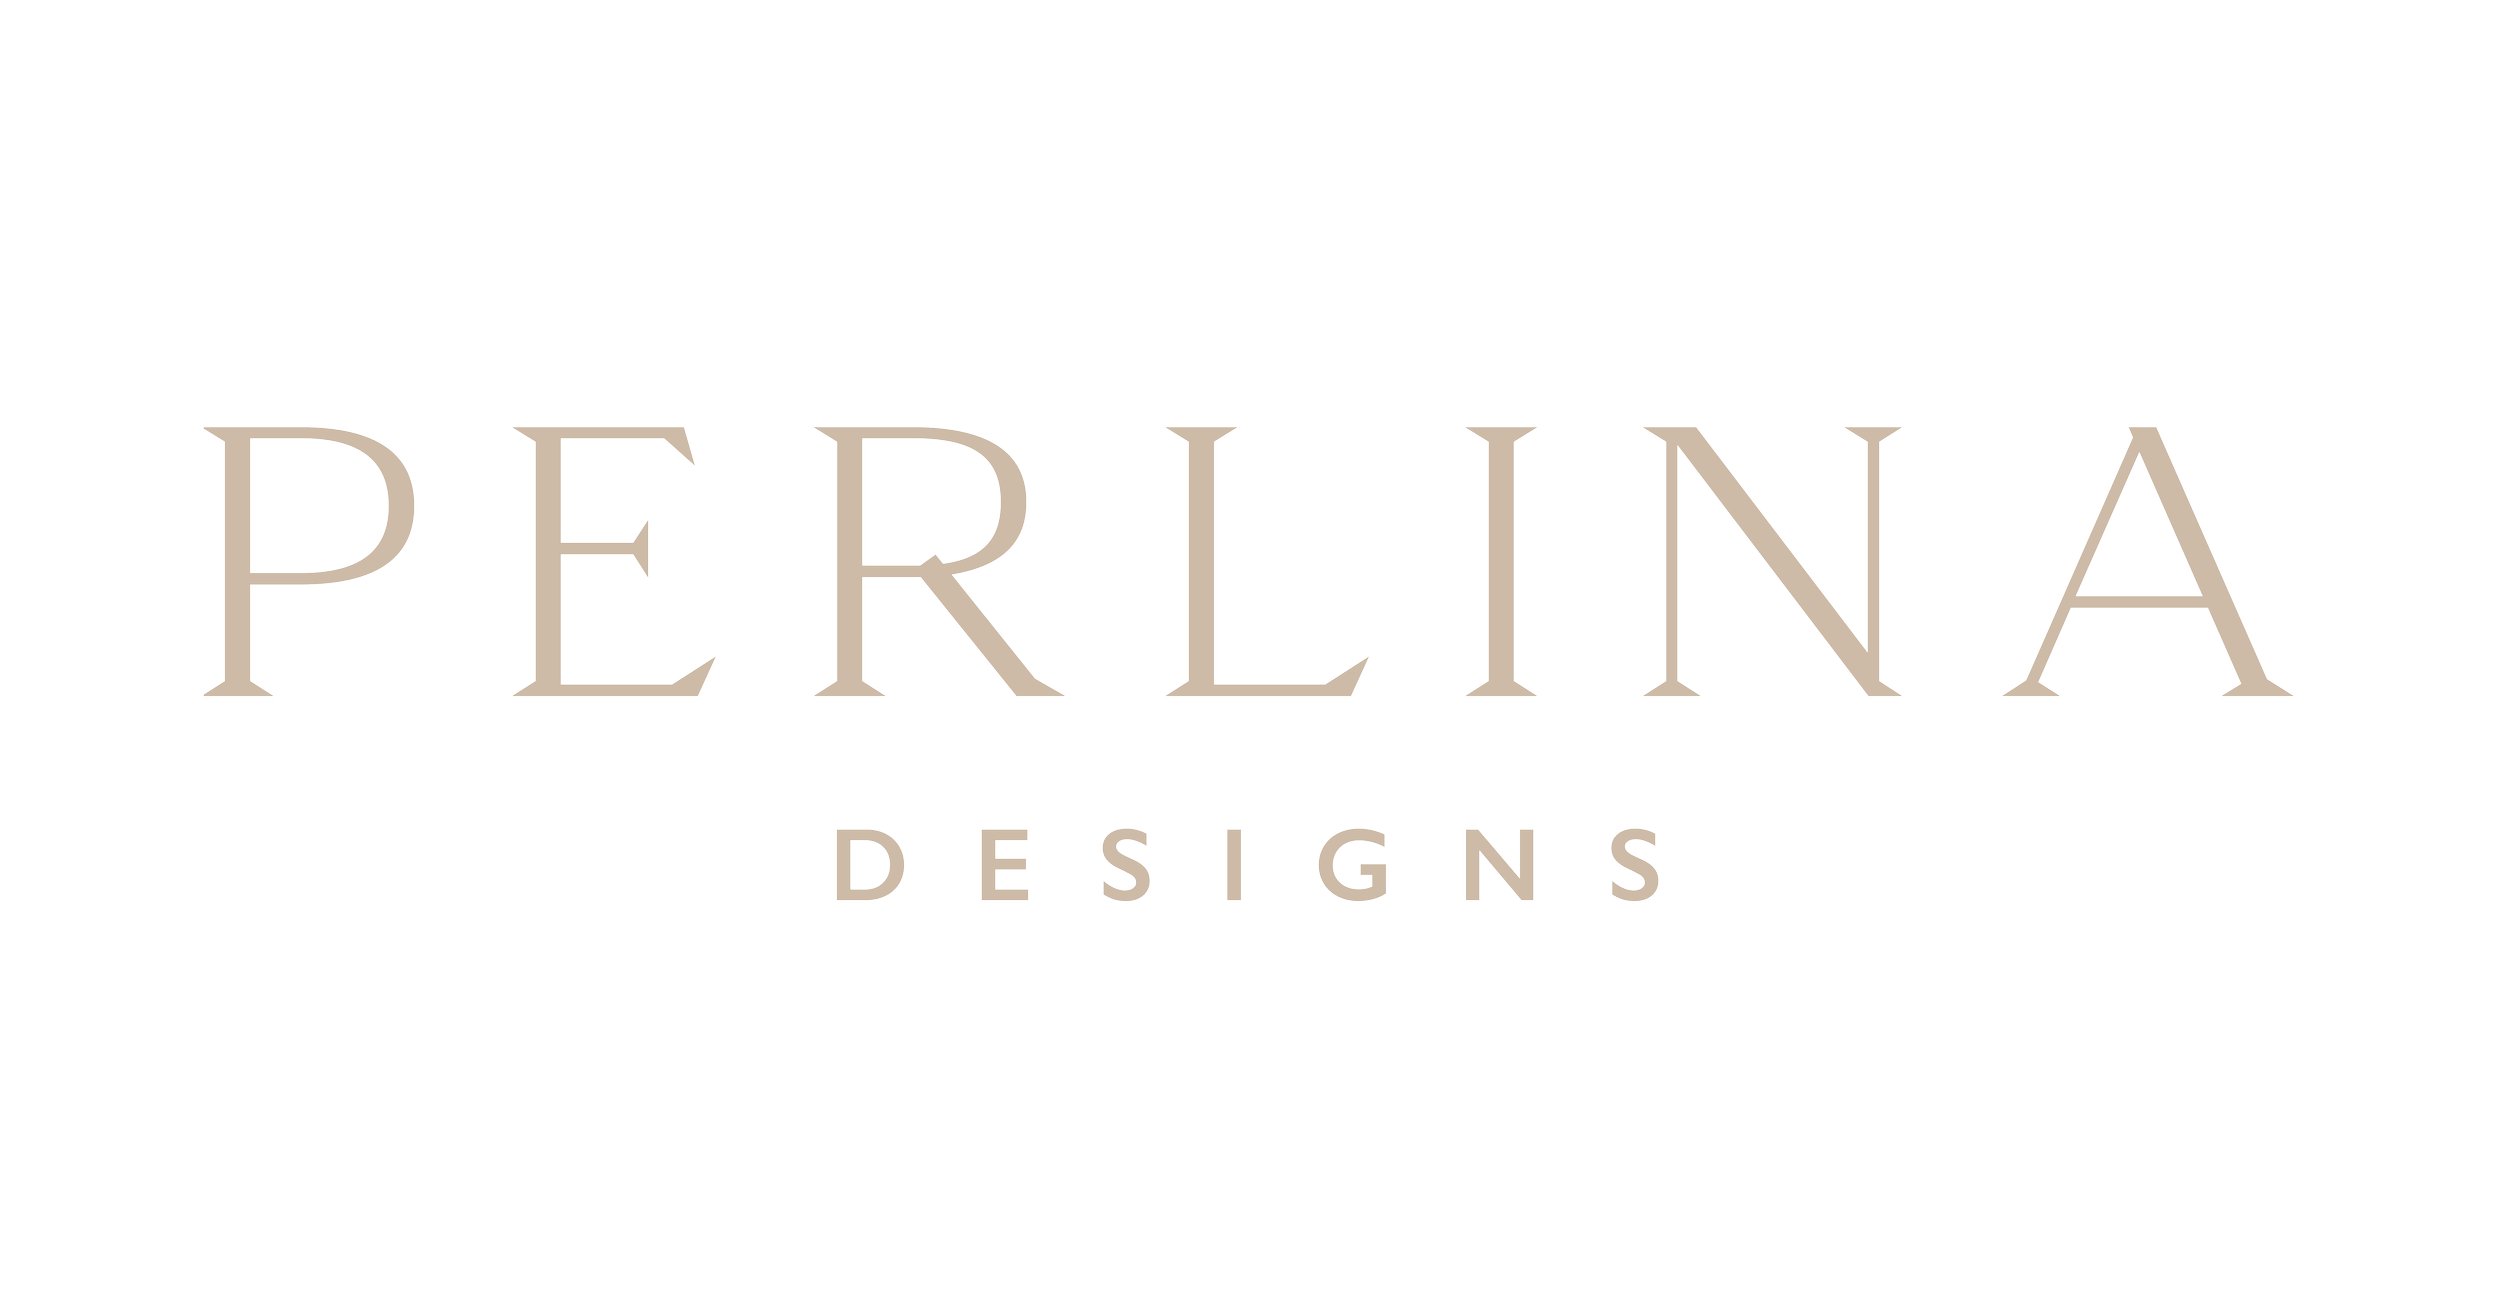 perlina designs